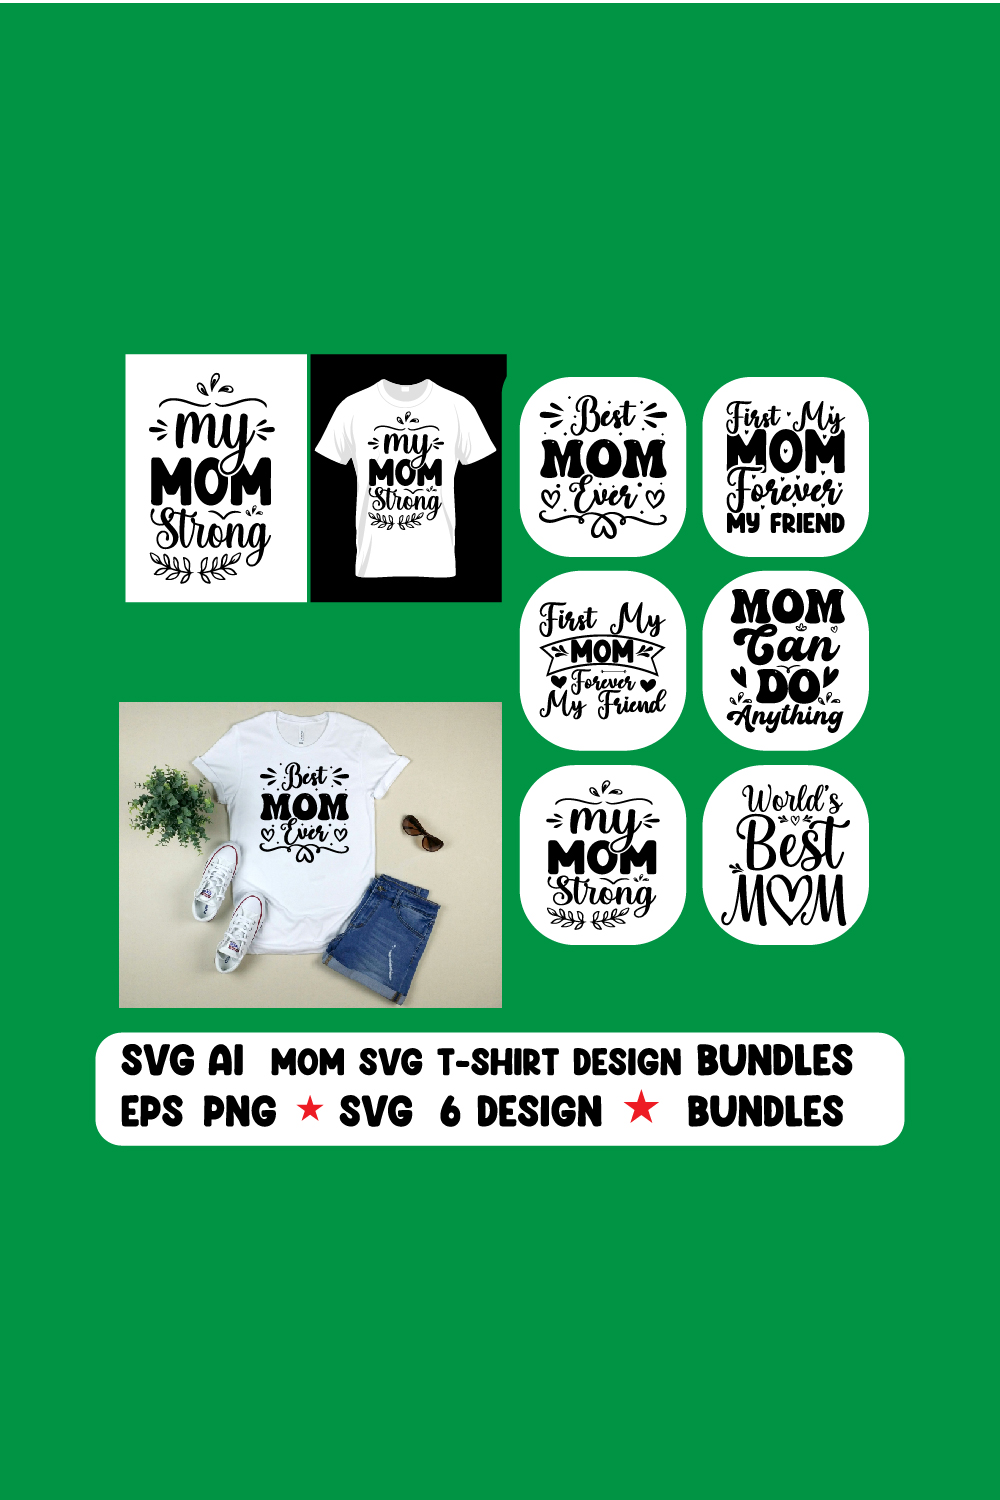 Mom t-shirt design typography & SVG design pinterest preview image.